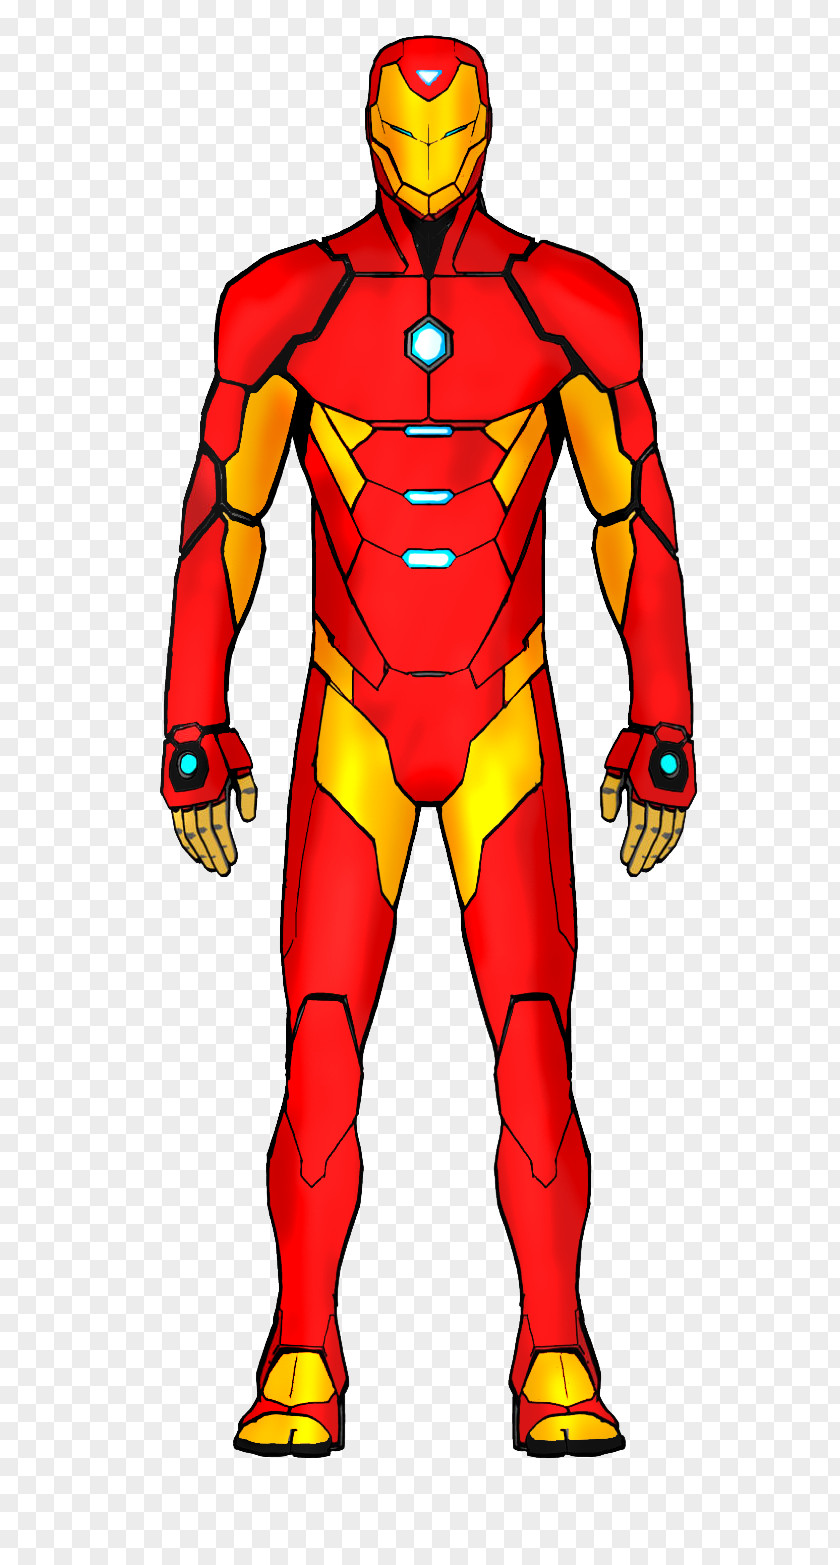 Iron Man Howard Stark Pepper Potts Superhero Marvel Cinematic Universe PNG